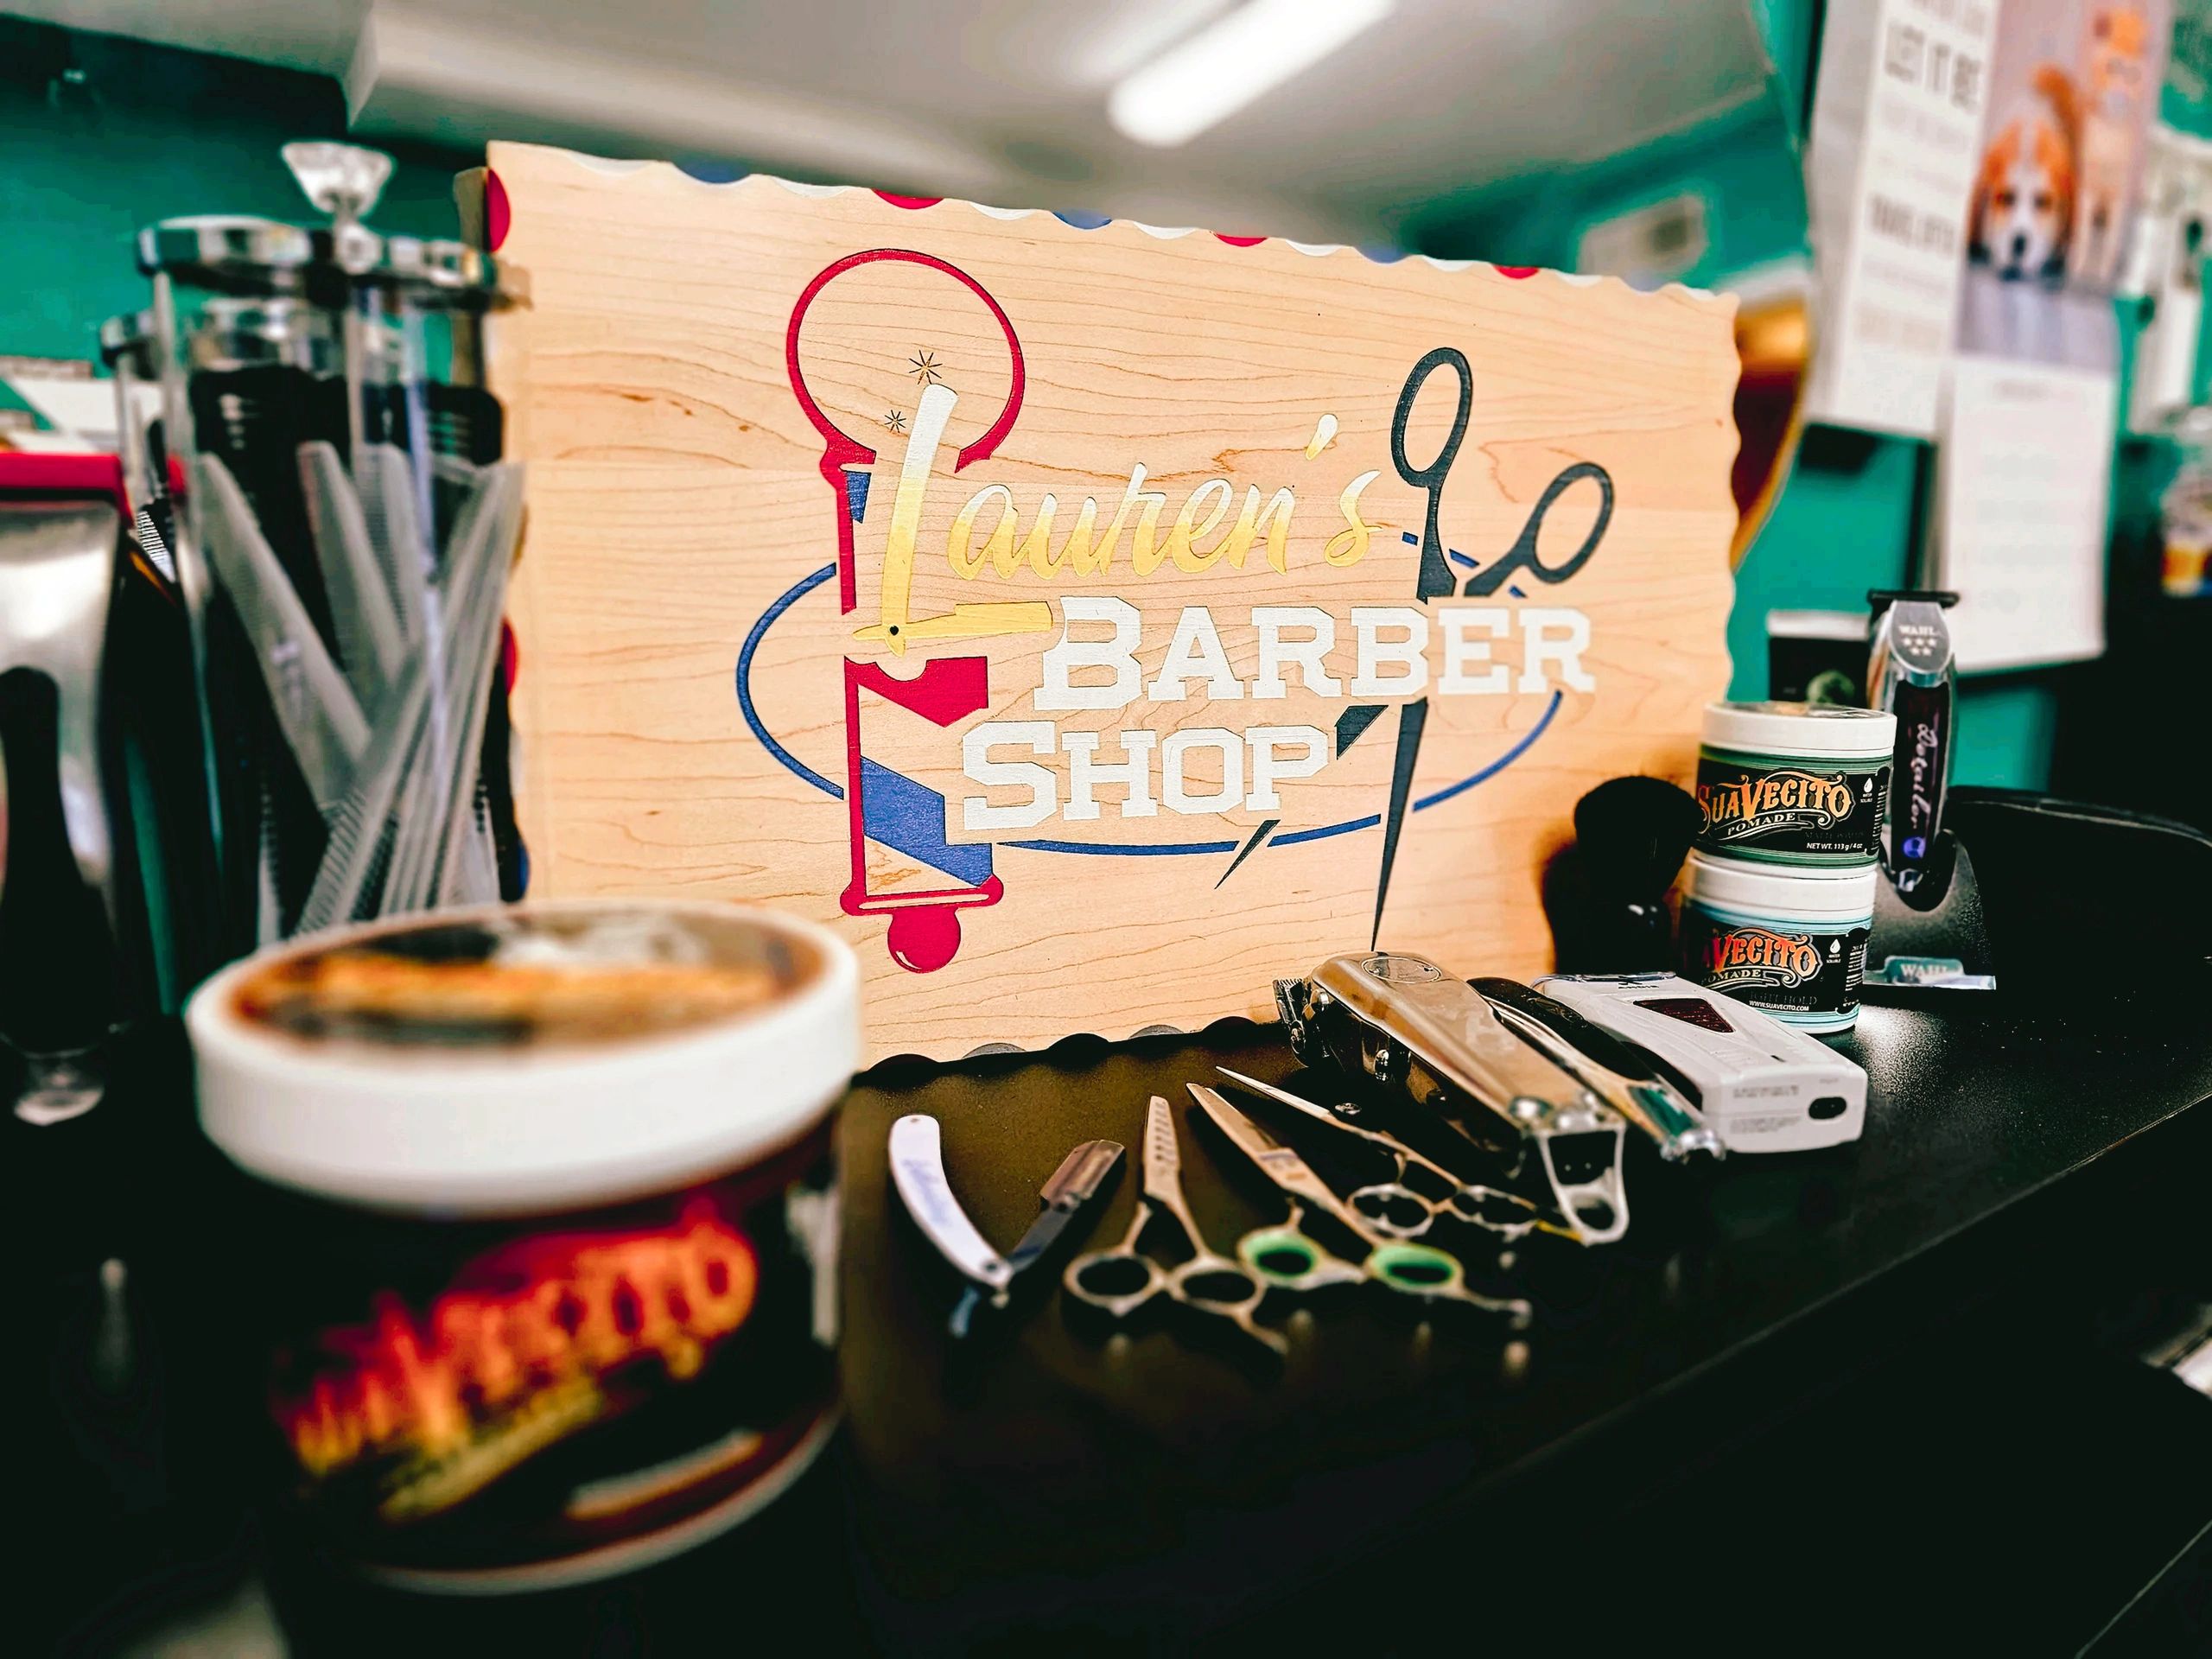 straight razor barbershop logo Laurens barber shop clippers compos.  